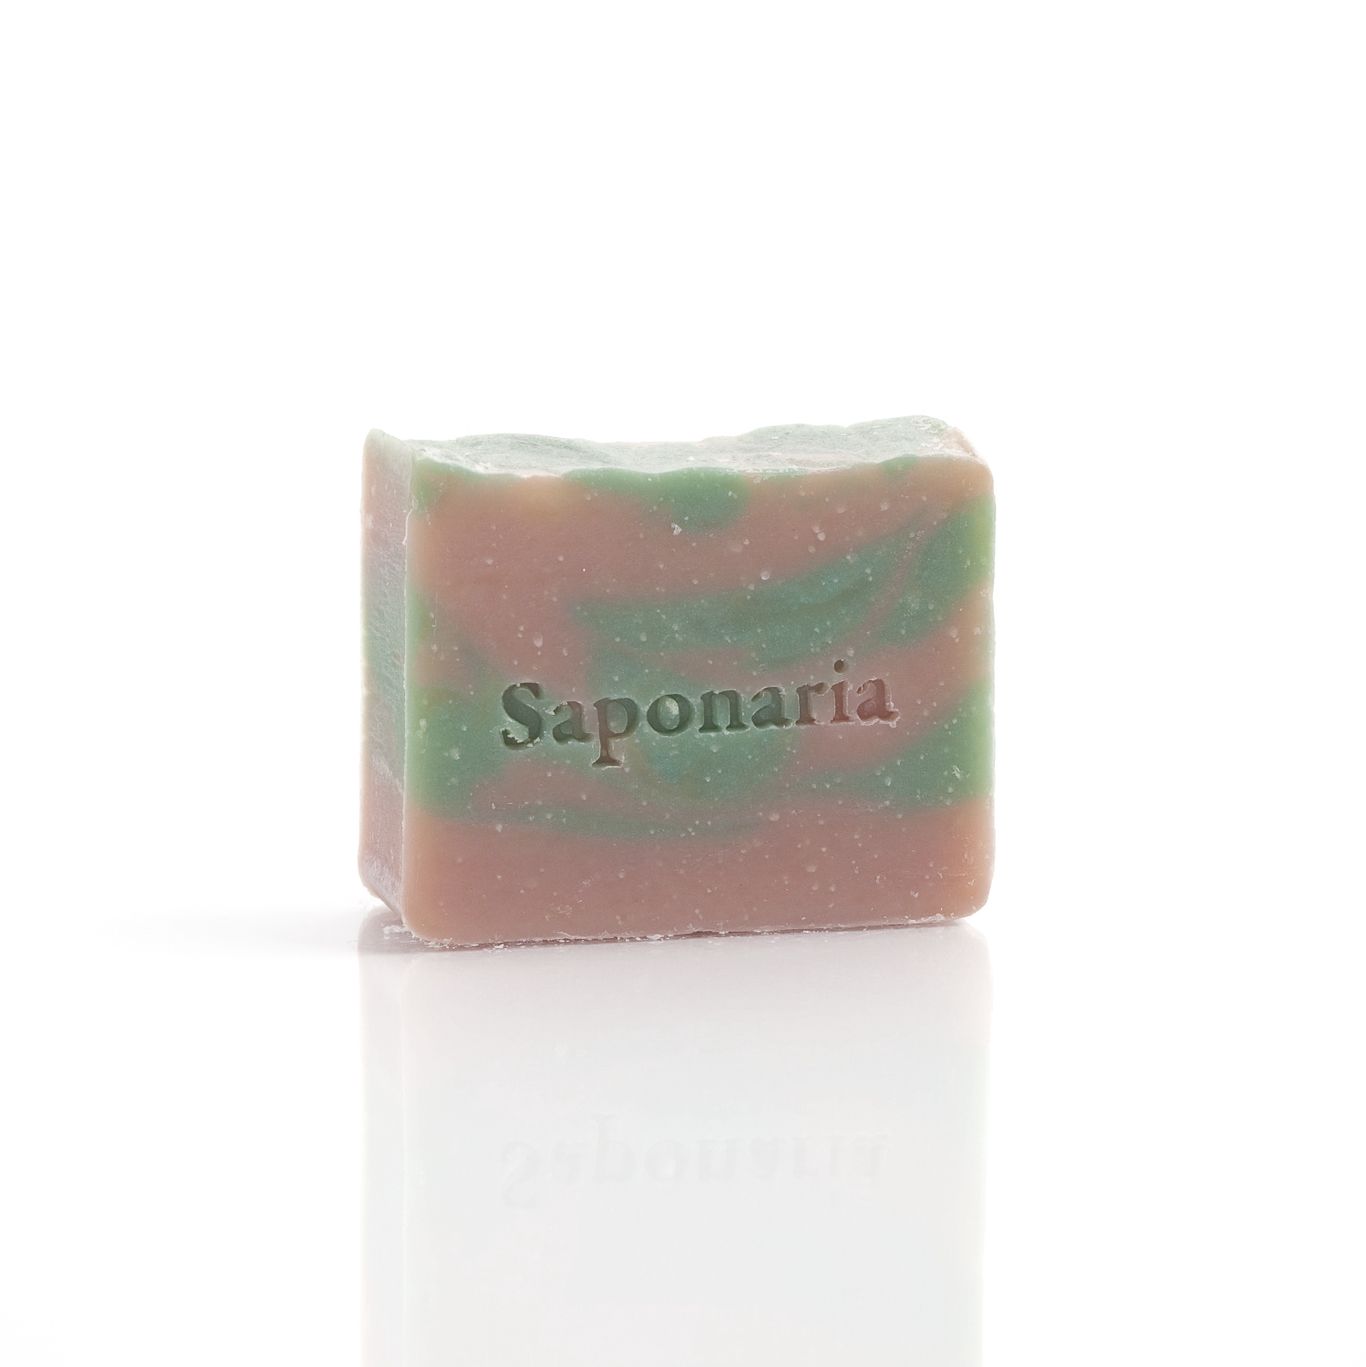 Saponaria Soaps